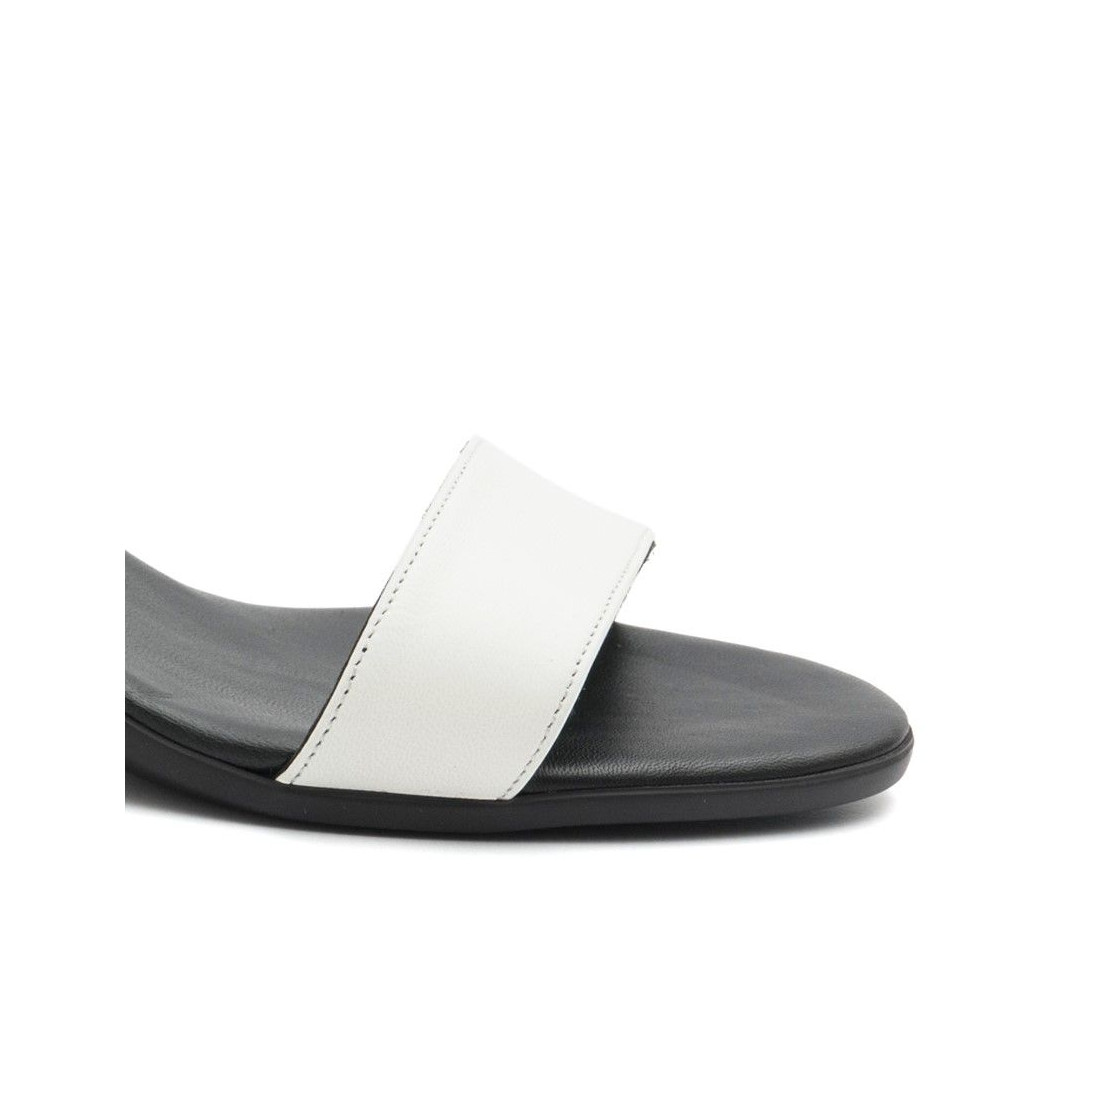 Medium heel Jemi sandals in white and black leather